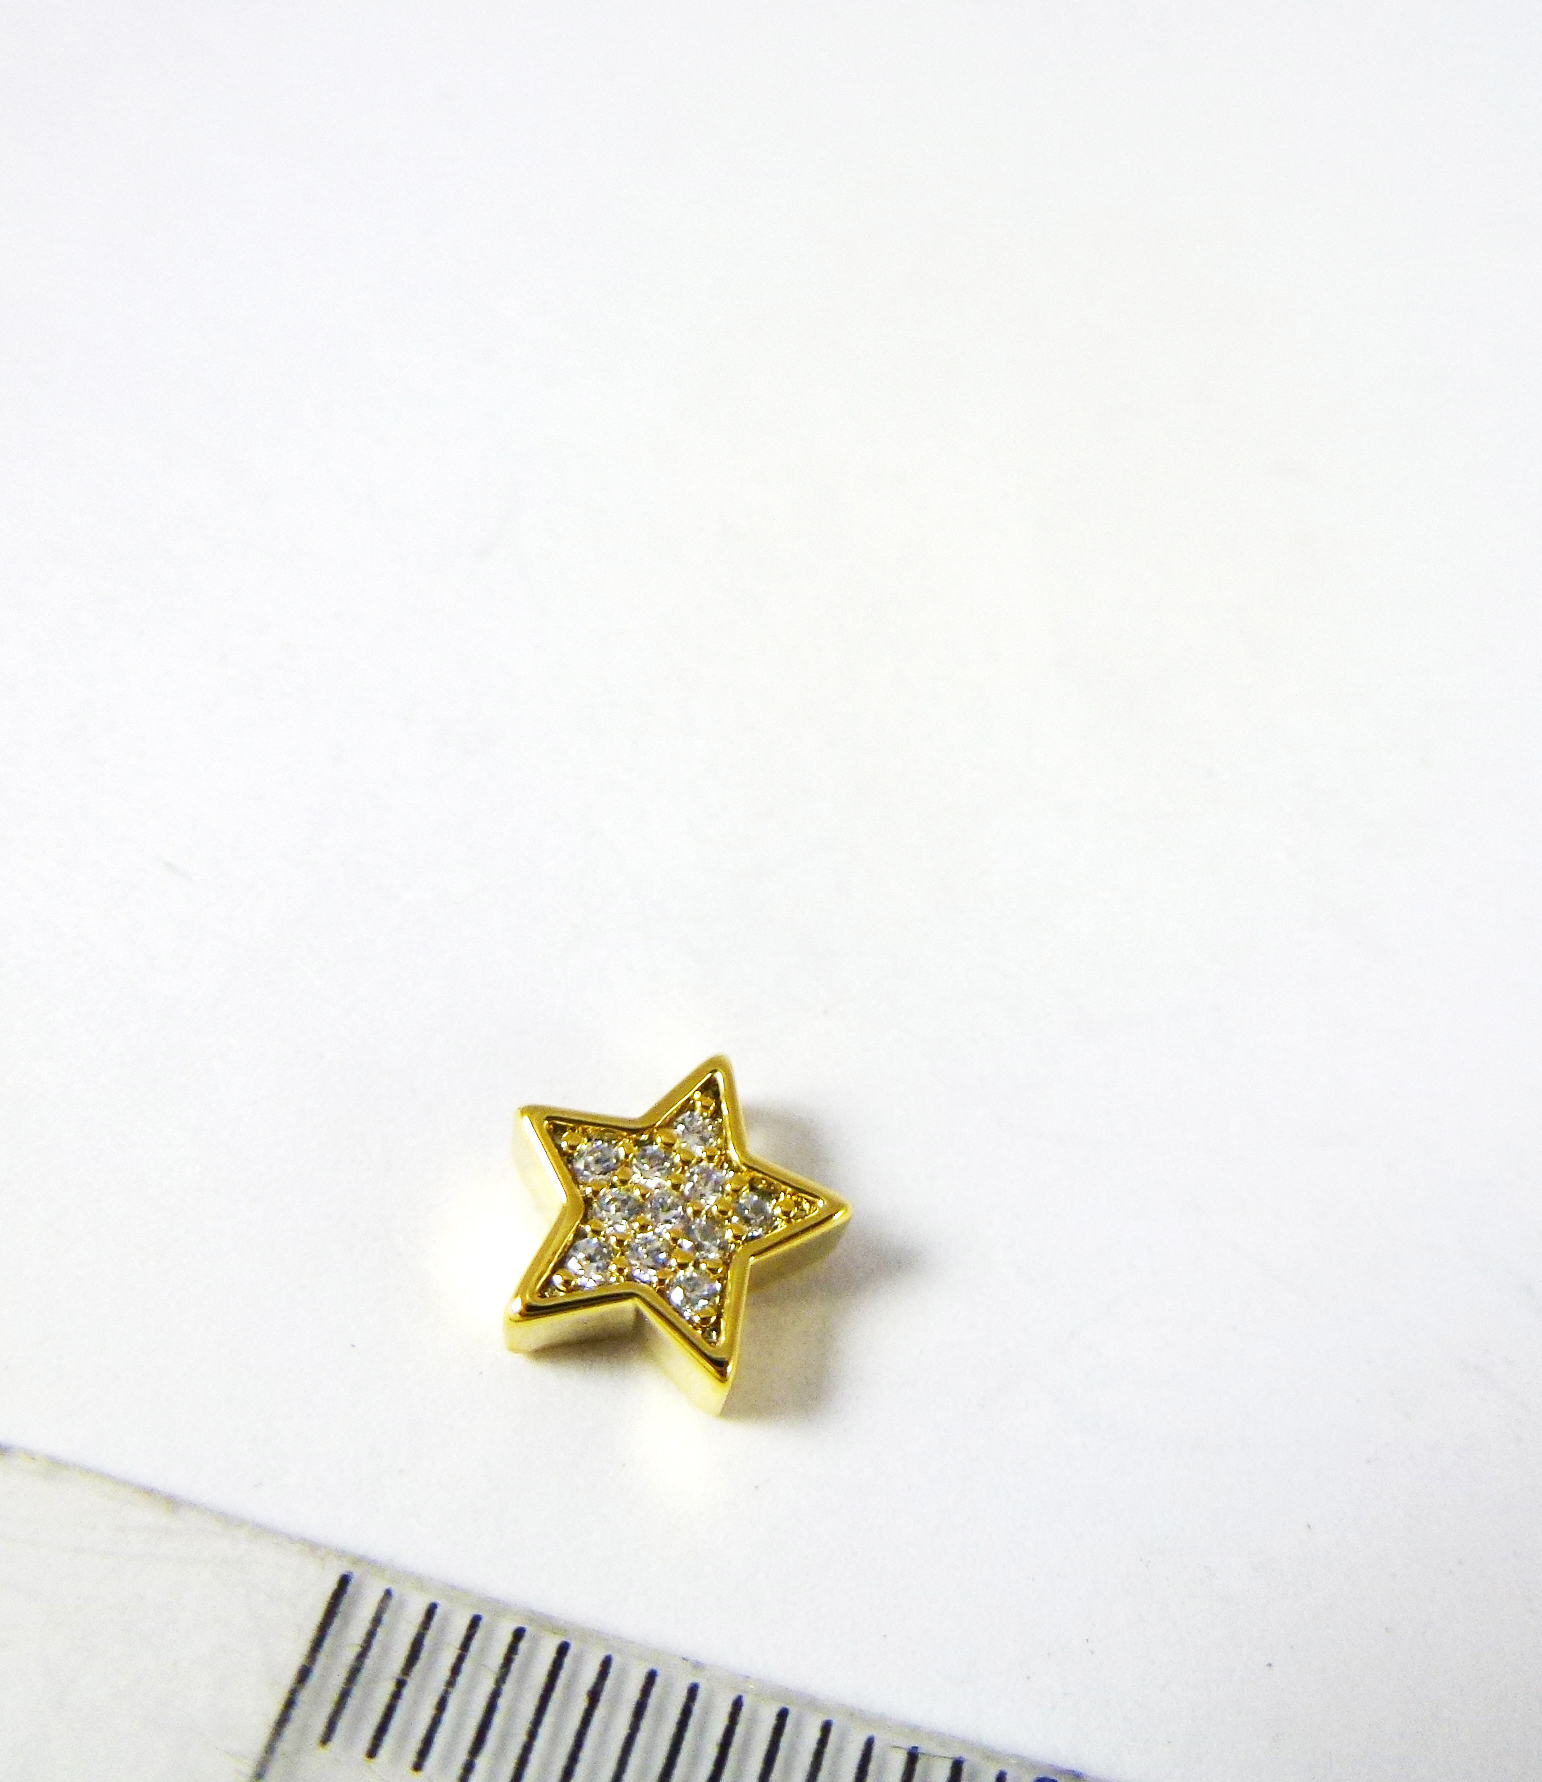 8mm銅鍍金色橫洞星星鑲鑽